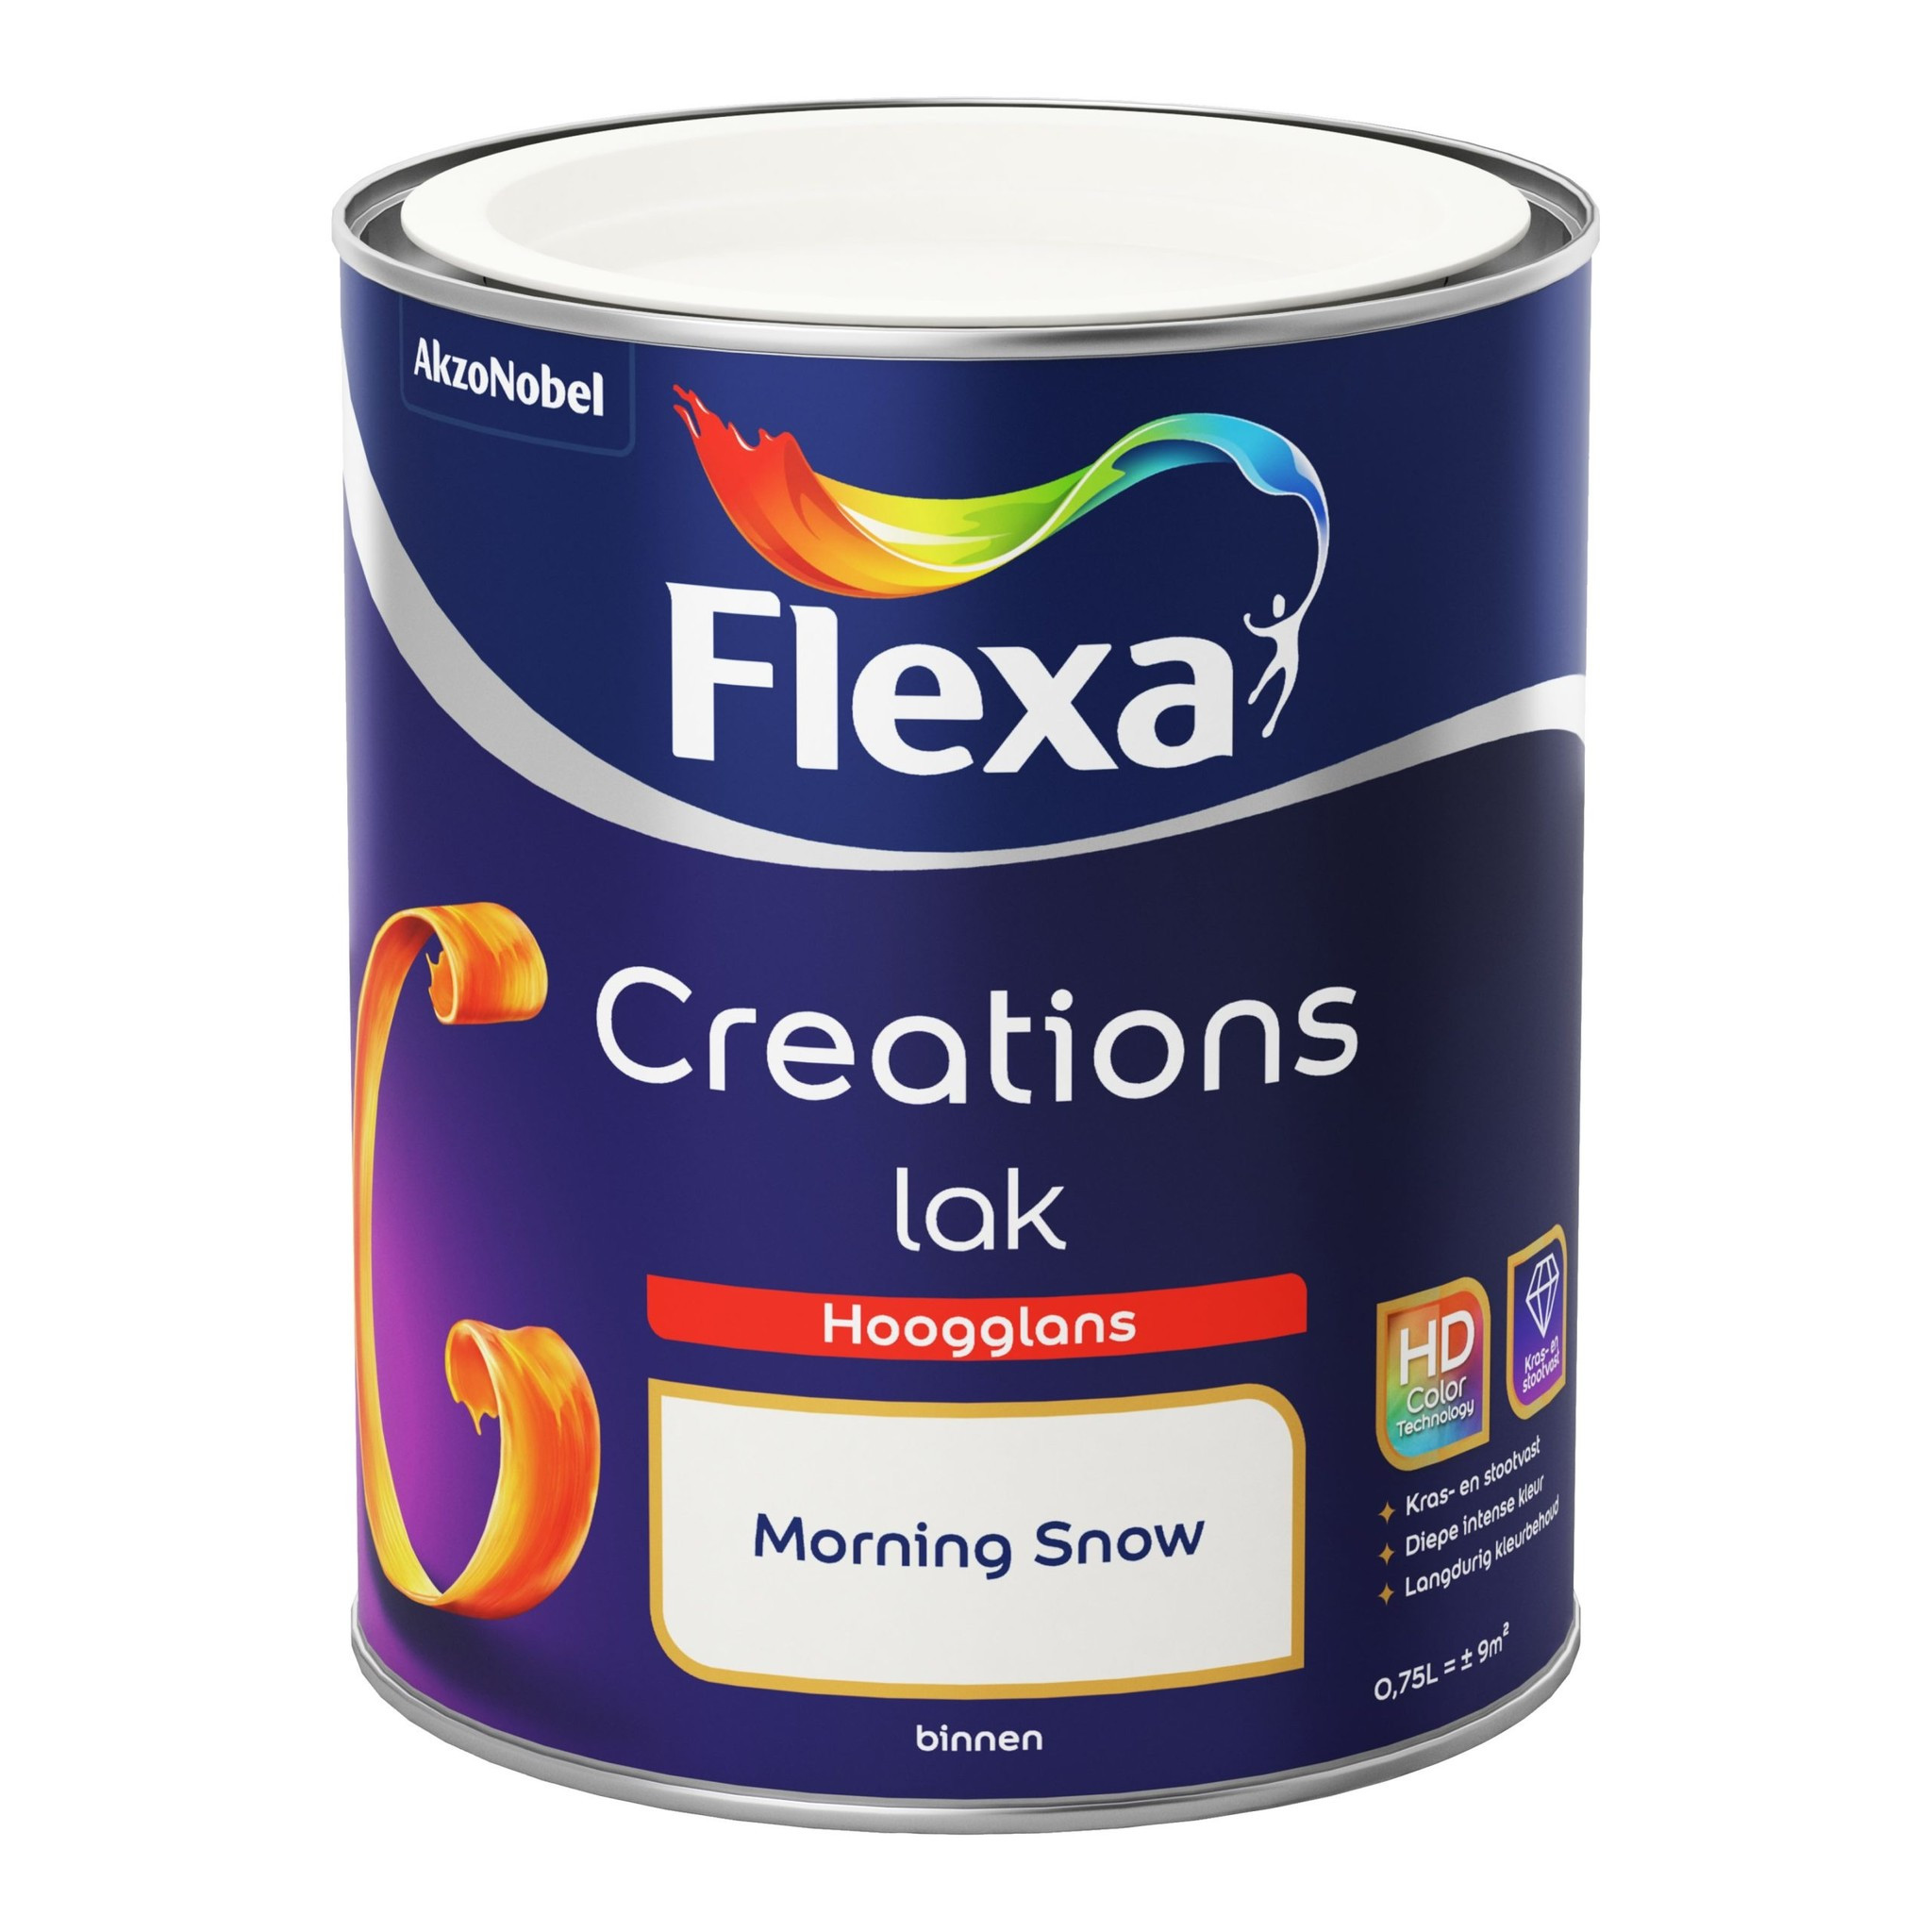 Flexa Creations Lak Hoogglans - Morning Snow